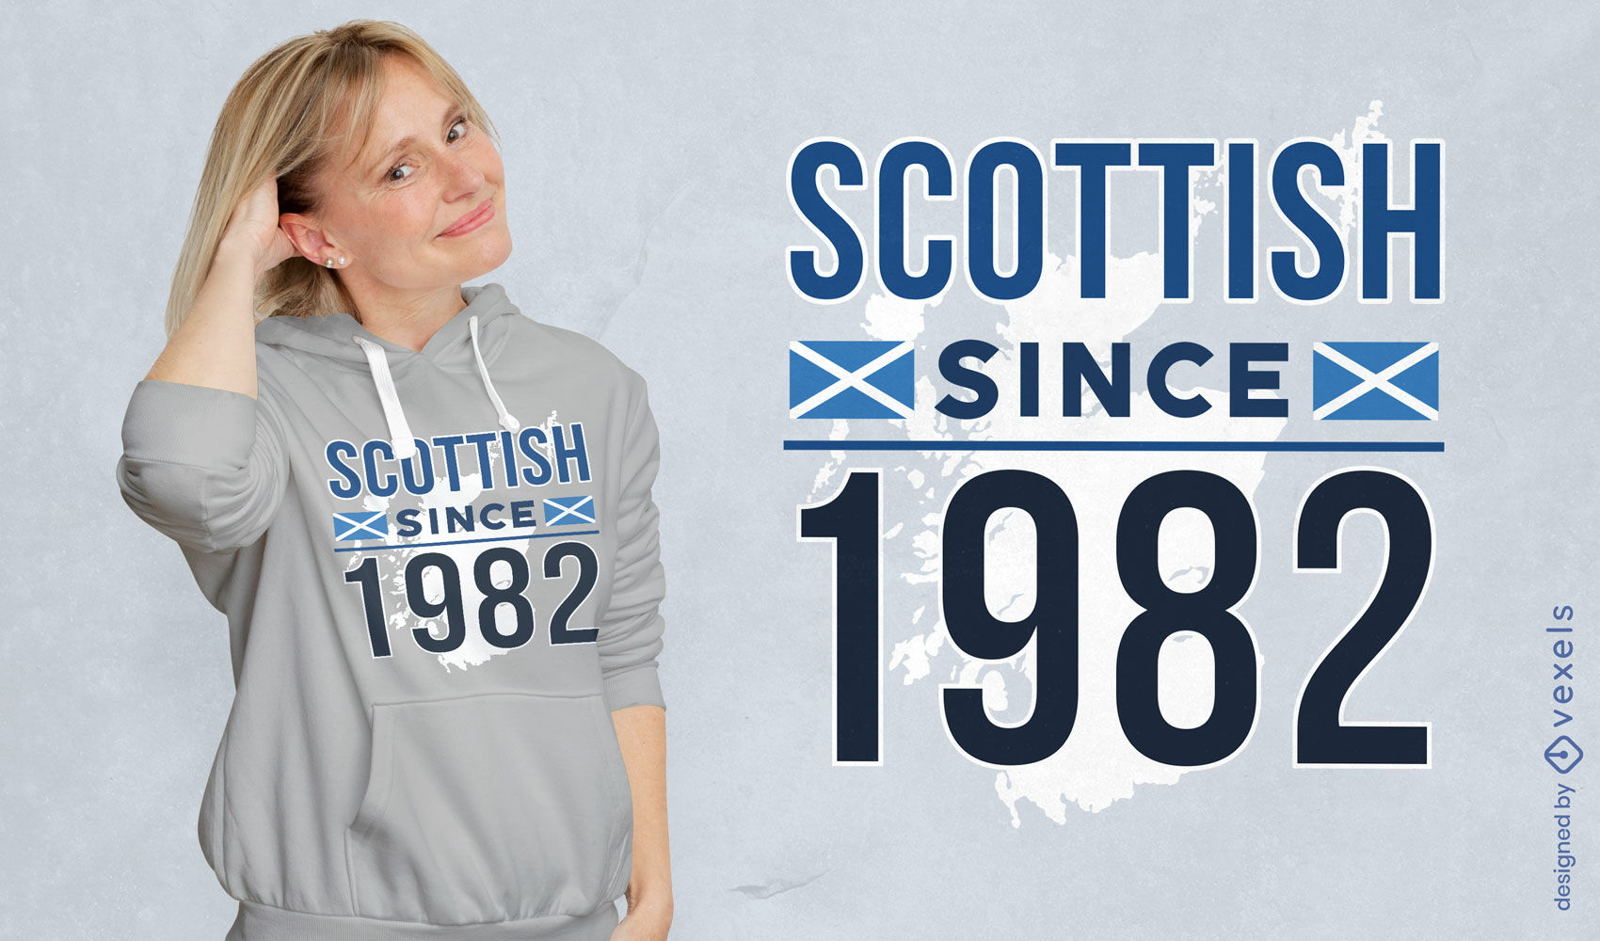 Escoc?s desde 1982 dise?o de camiseta.